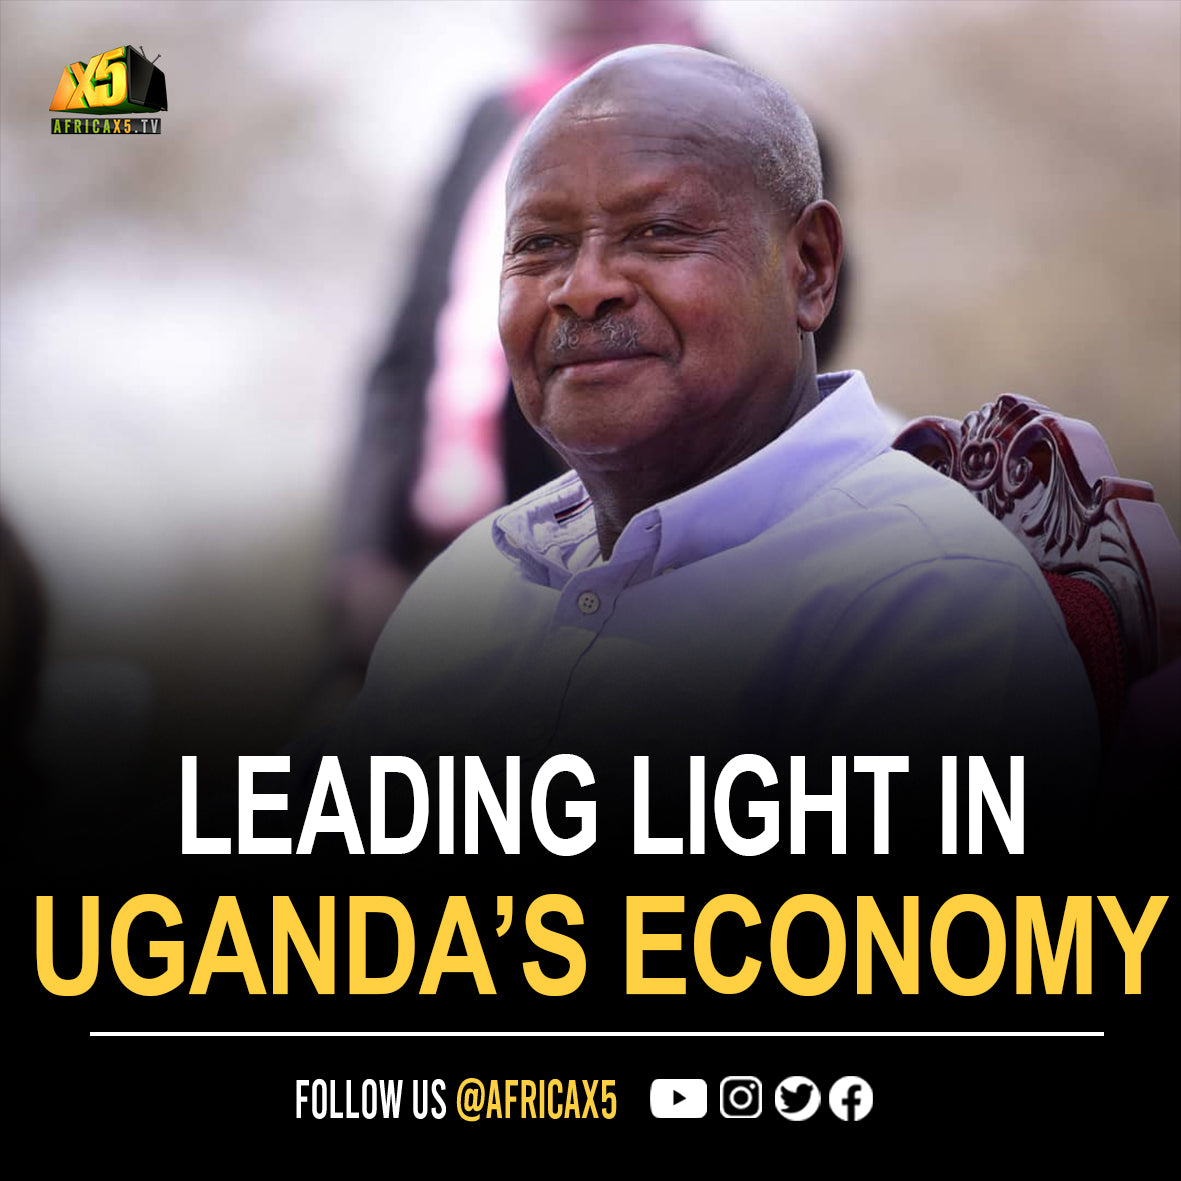 Muhakanizi: A leading light in Uganda’s economic recovery